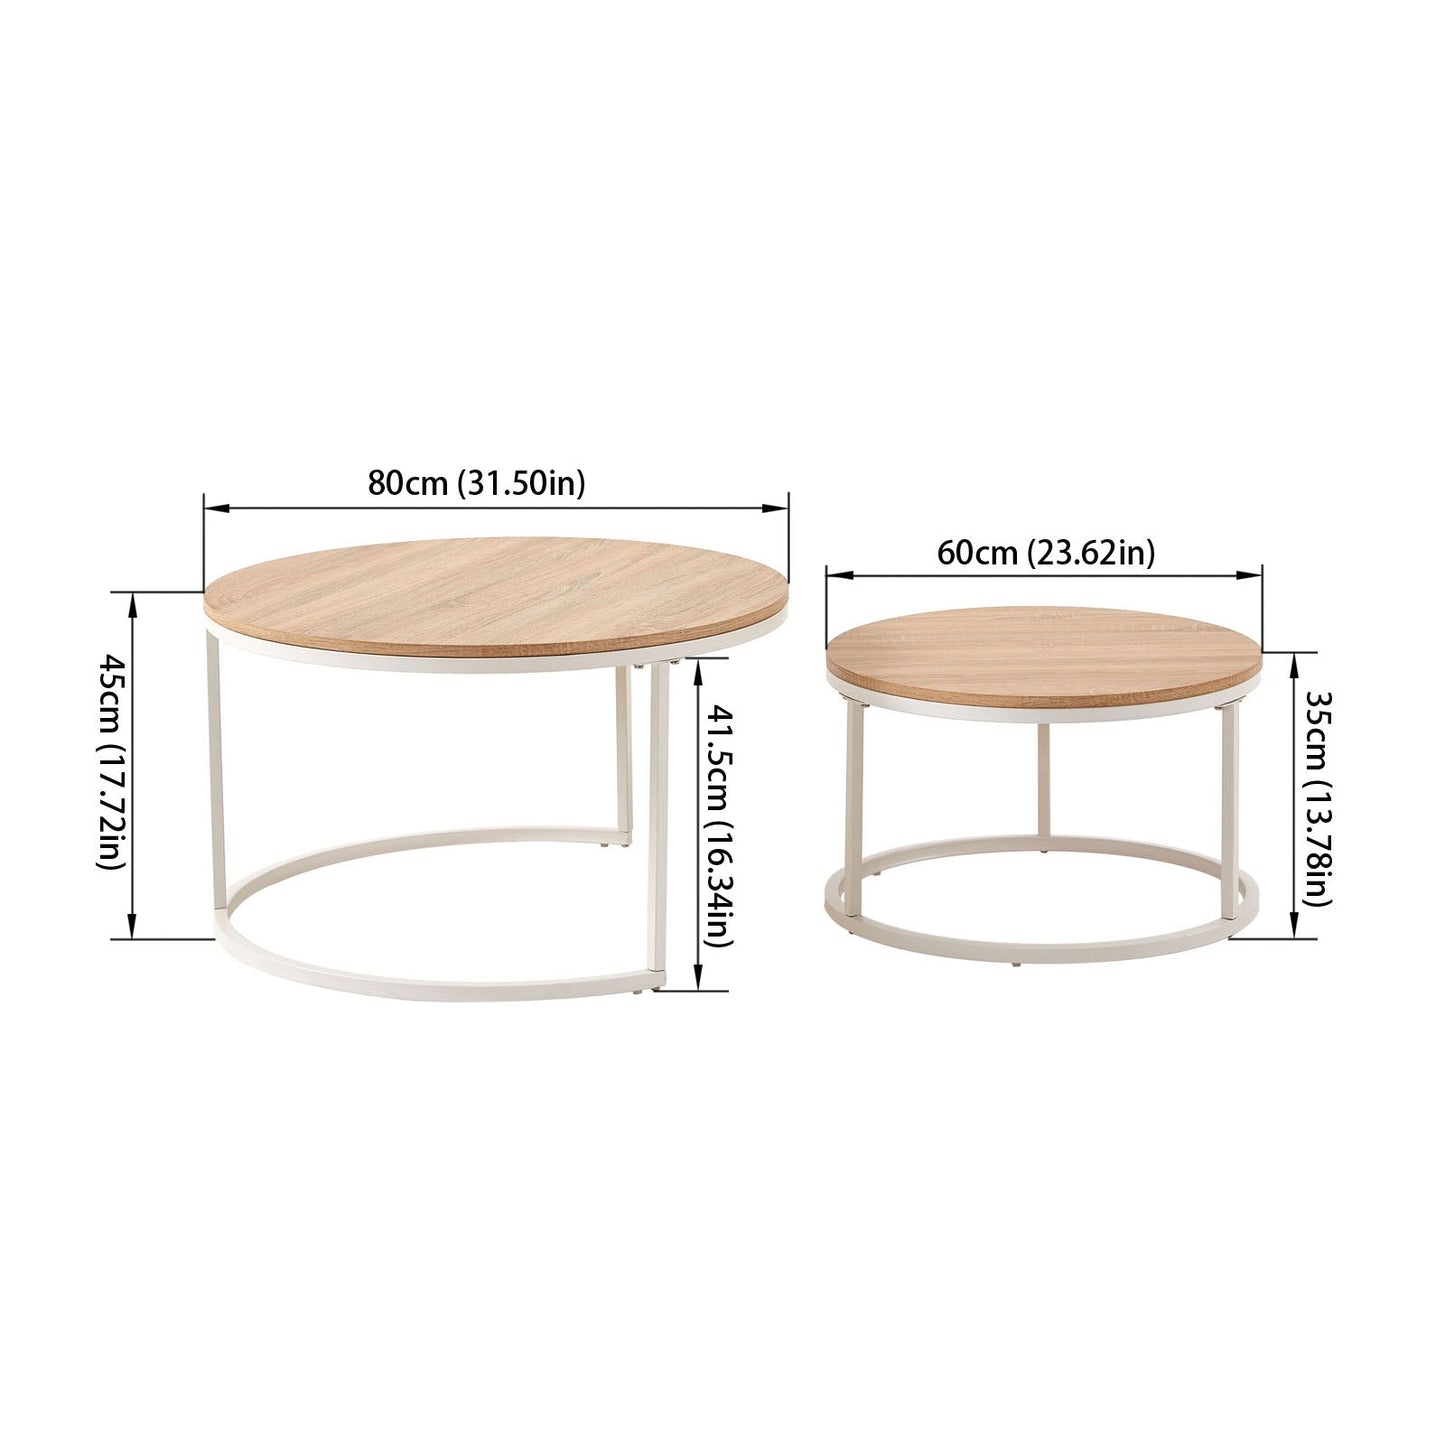 CARB Set of 2 Iron Frame Coffee Tables - Oak Φ80 * 45cm / Φ60 * 35cm - Light Brown